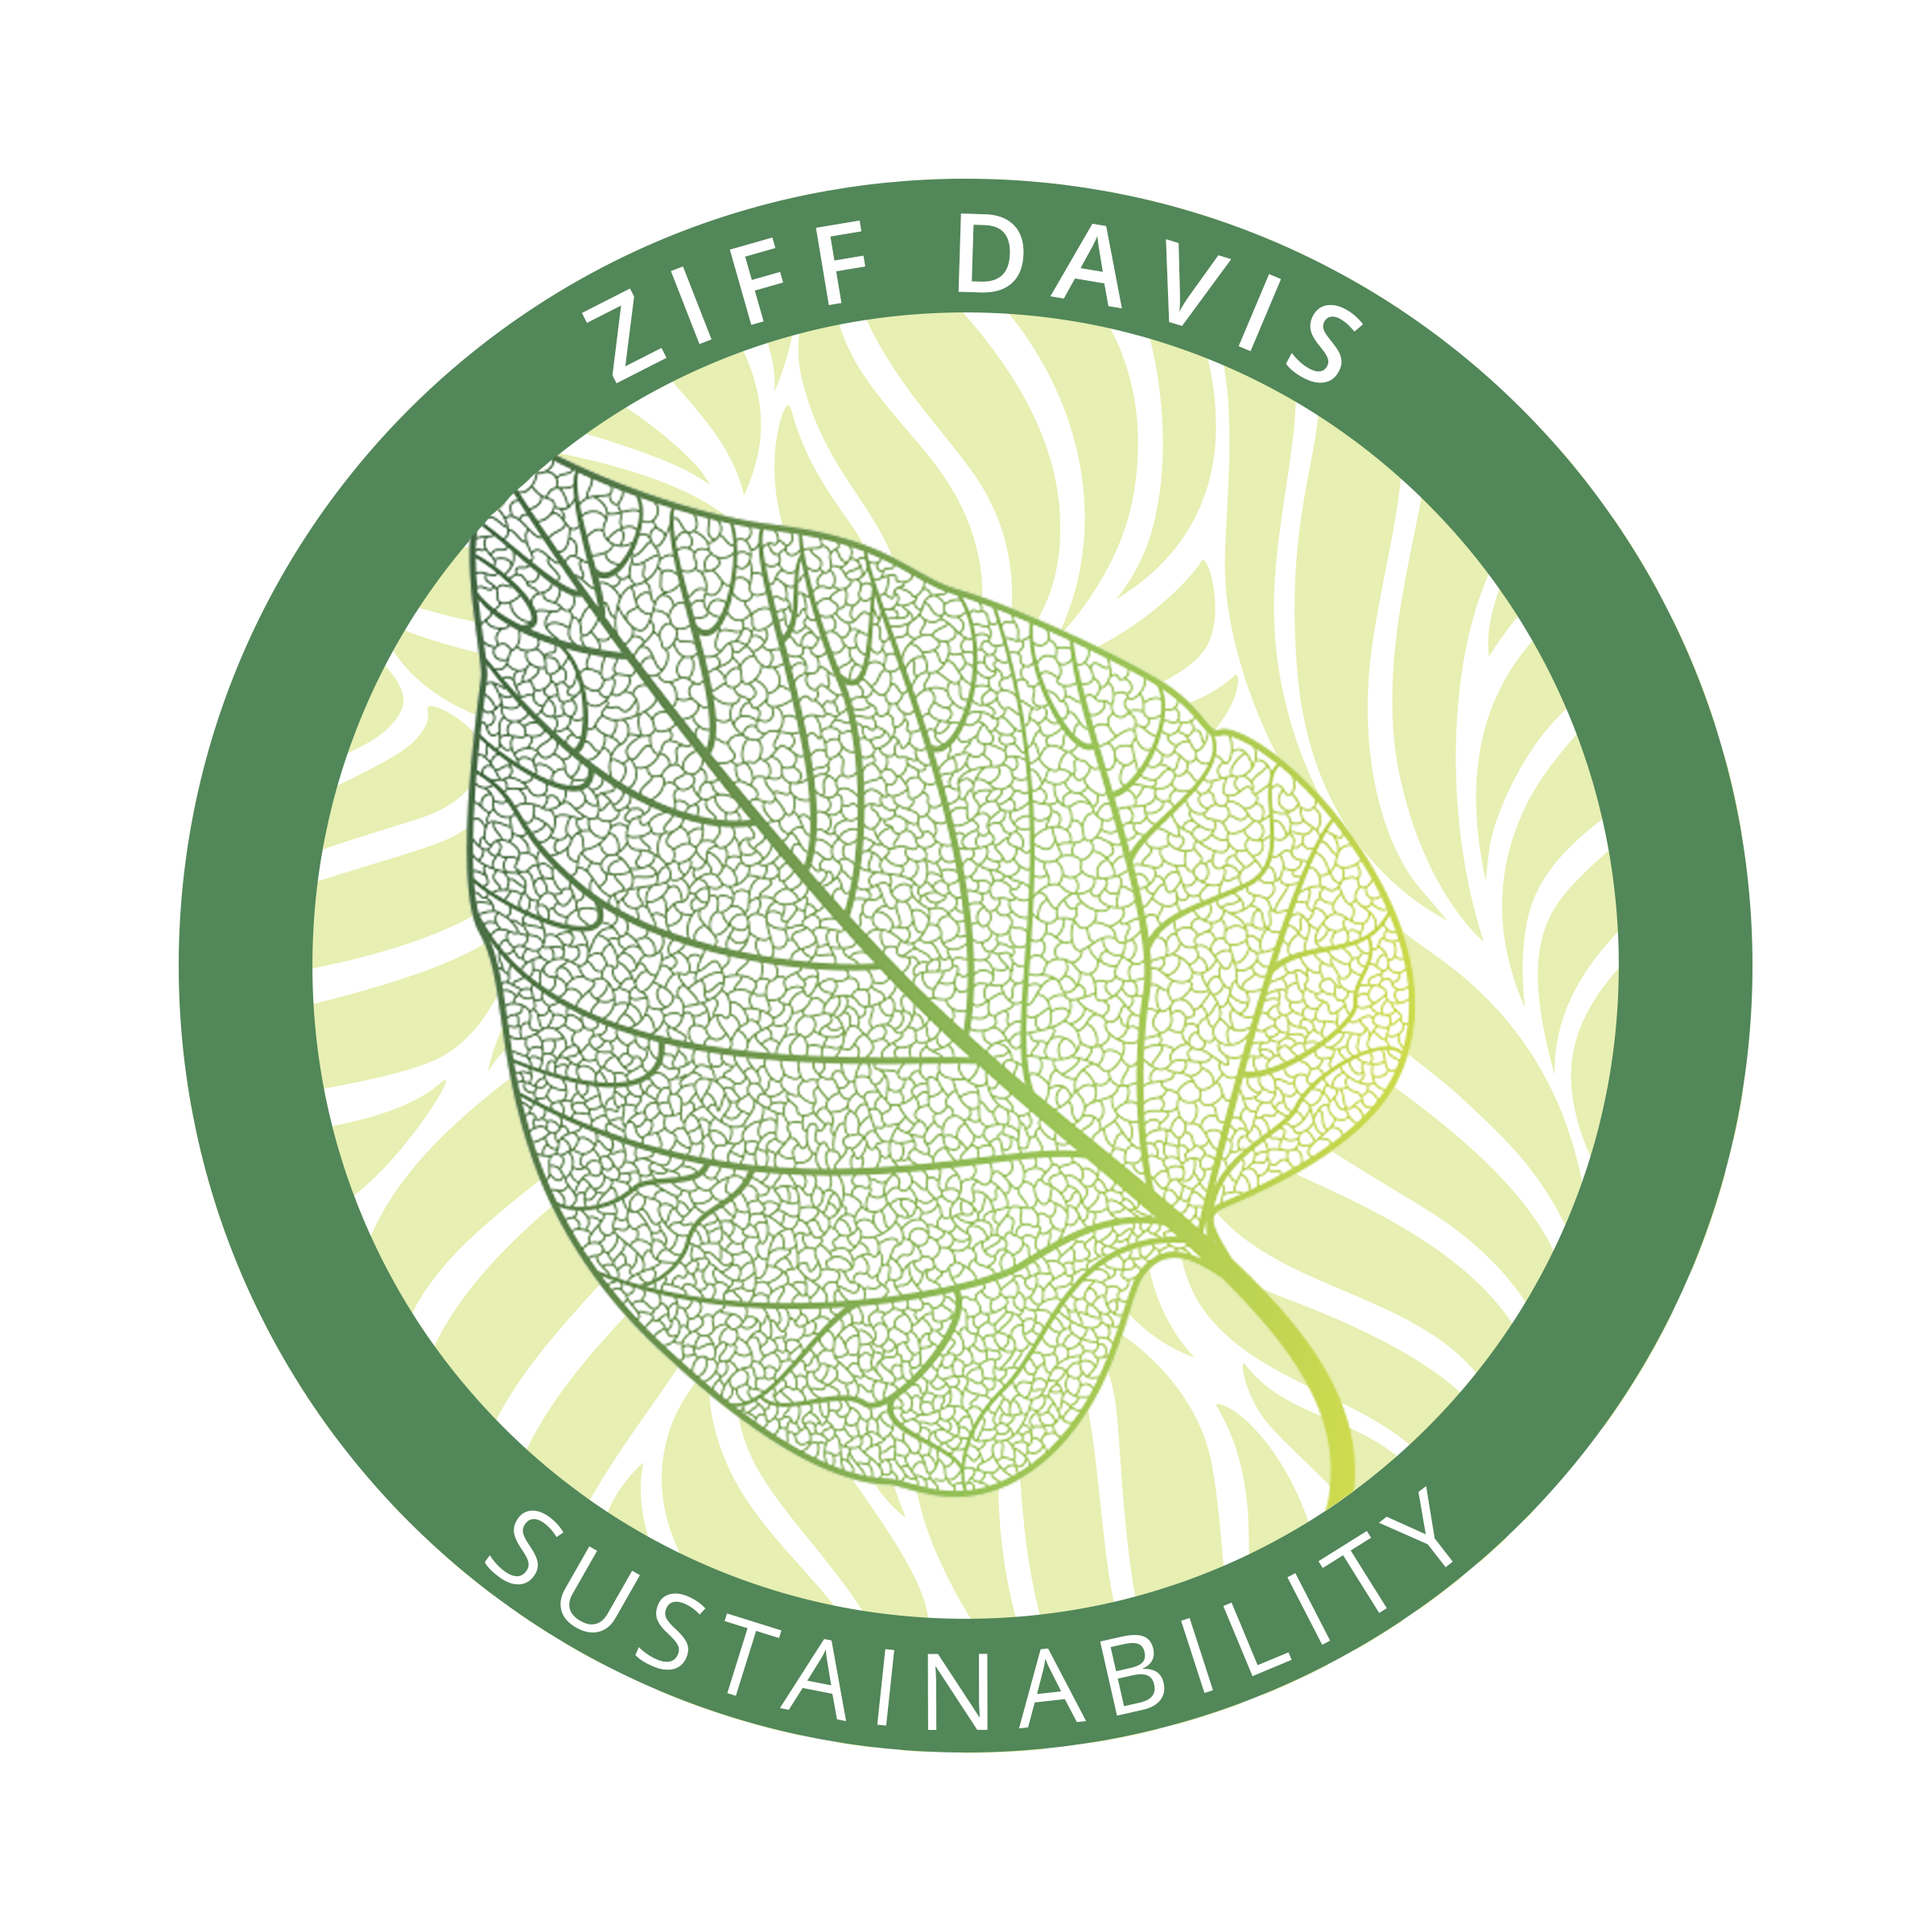 Ziff Davis Sustainability Council